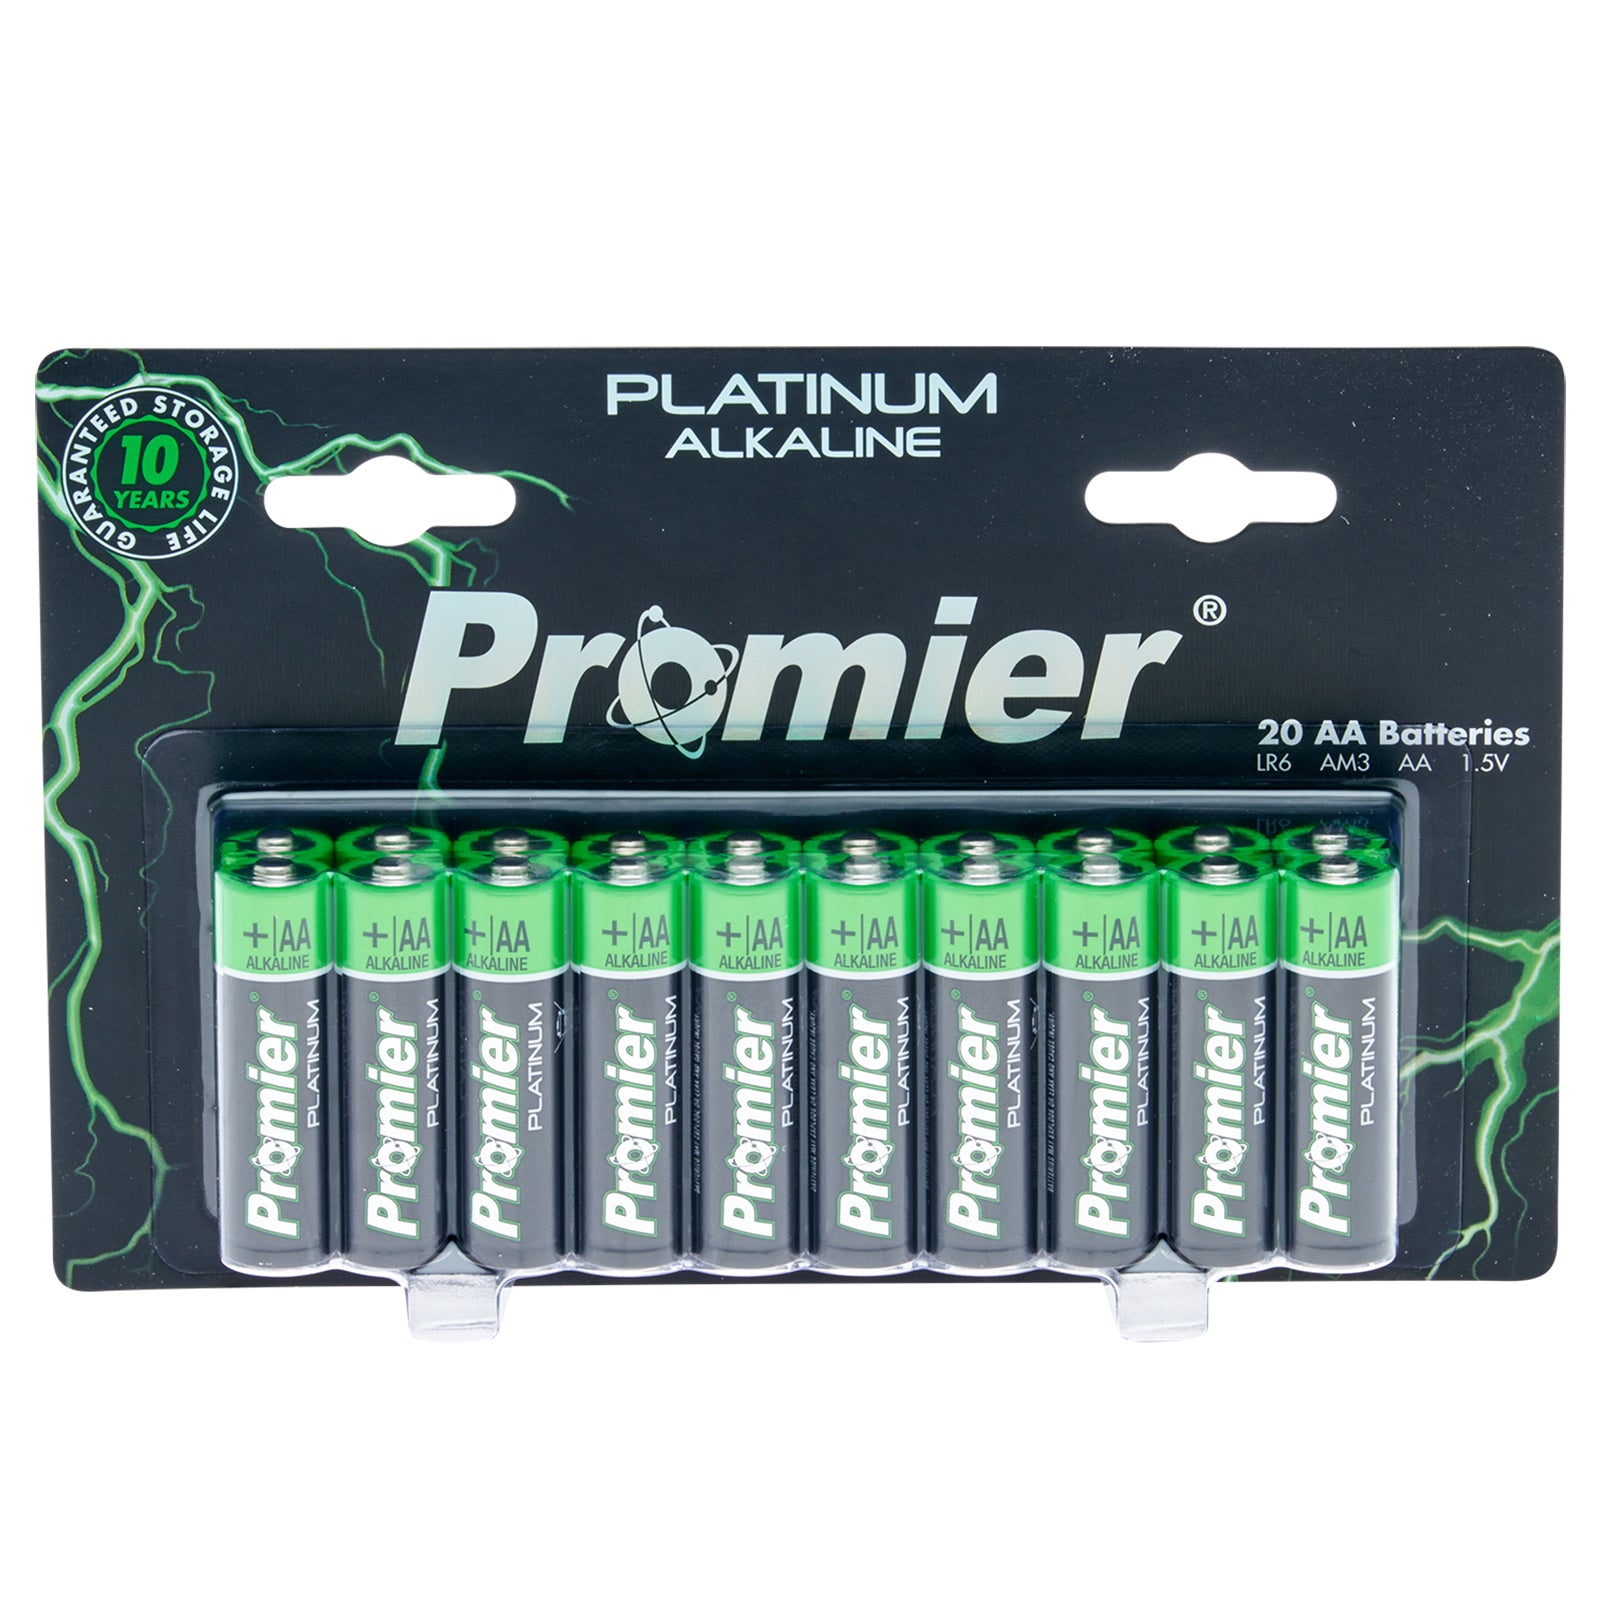 Promier® AA Platinum Alkaline Battery 20 Pack